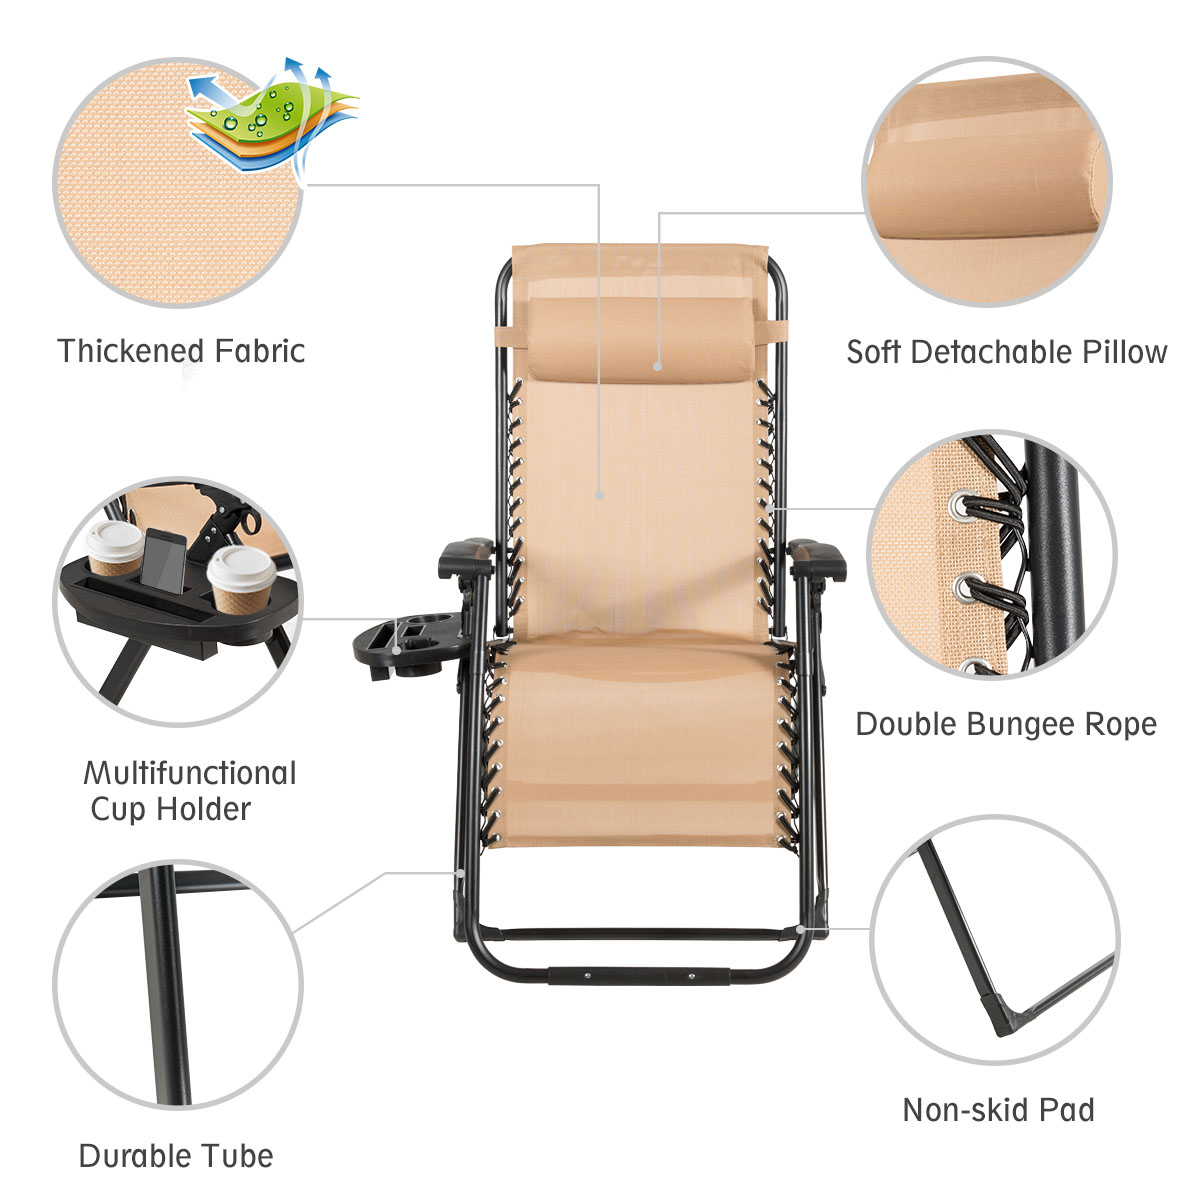 Costway Zero Gravity Chair Oversize Lounge Chair Patio Heavy Duty Folding Recliner Beige - image 5 of 8